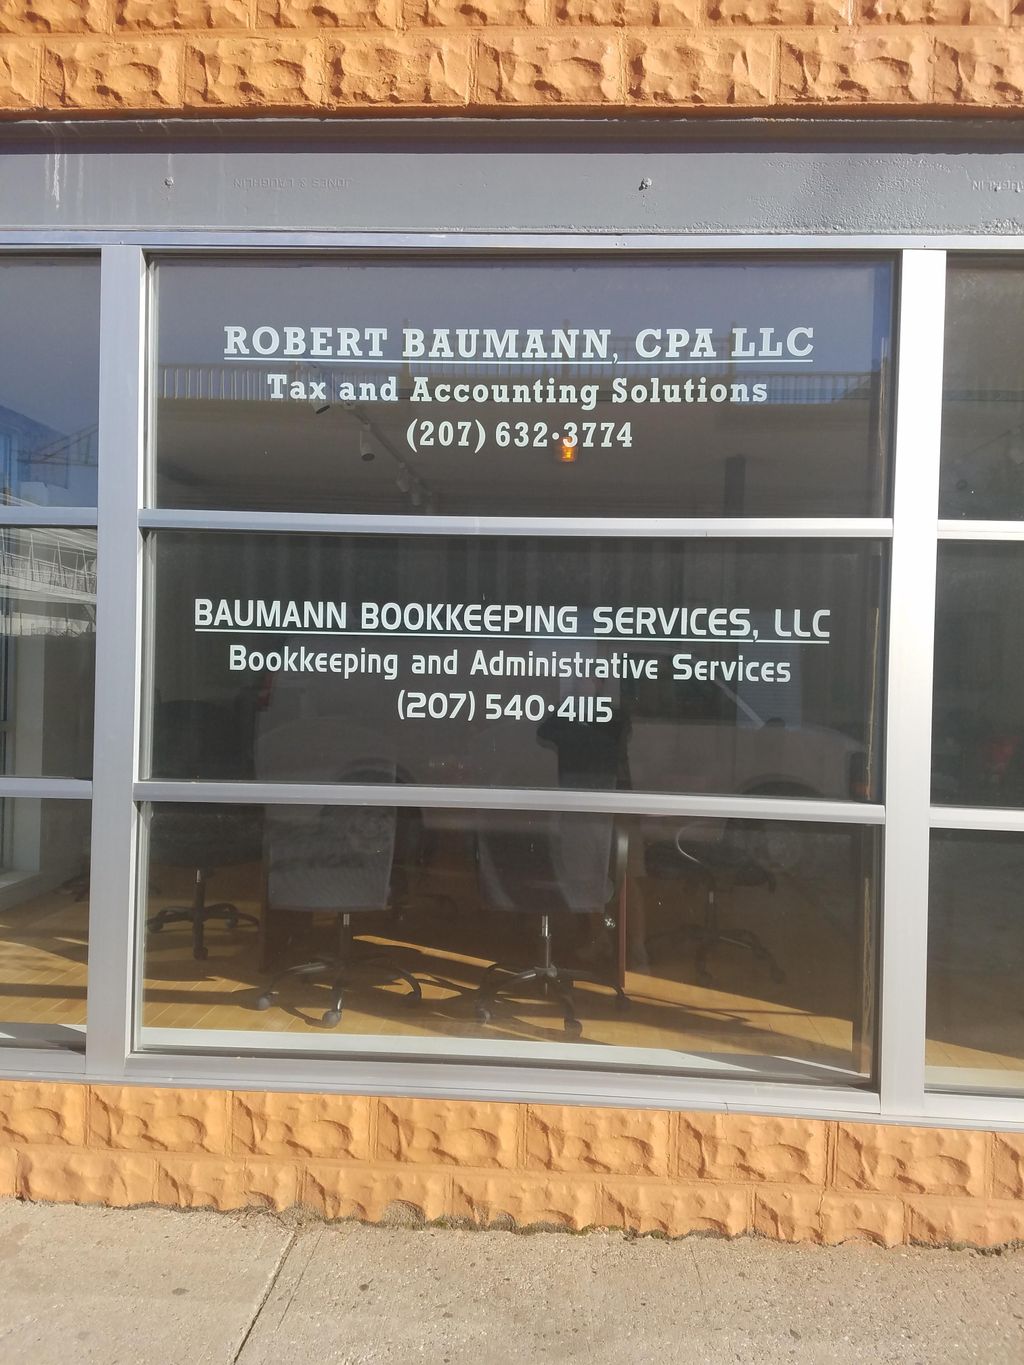 Robert Baumann, CPA LLC